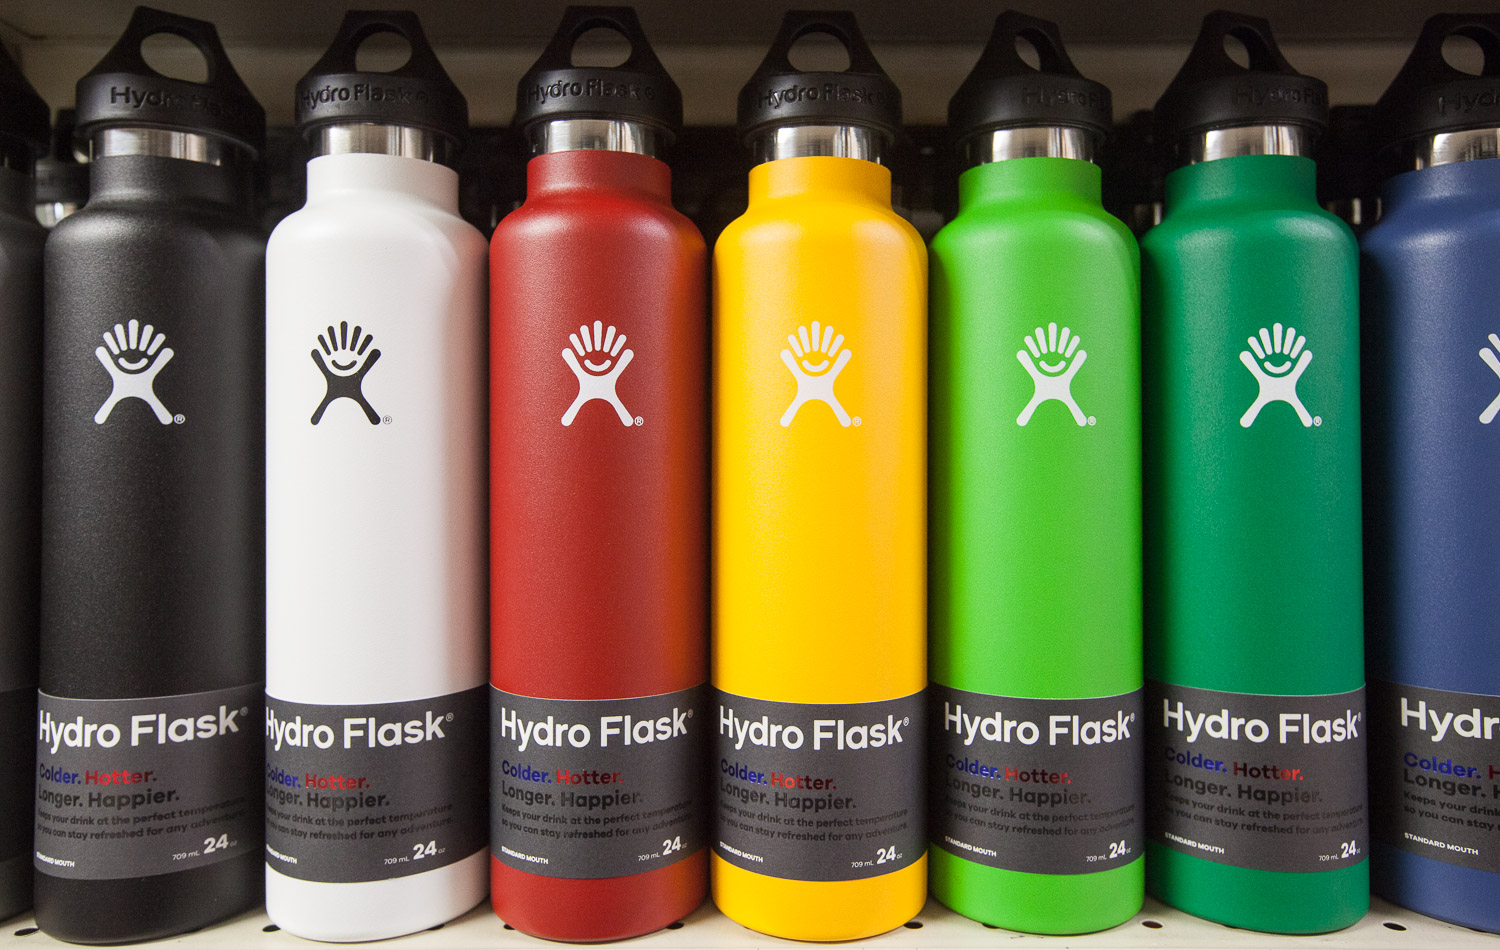 hydro-flask-display-mana-foods.jpg